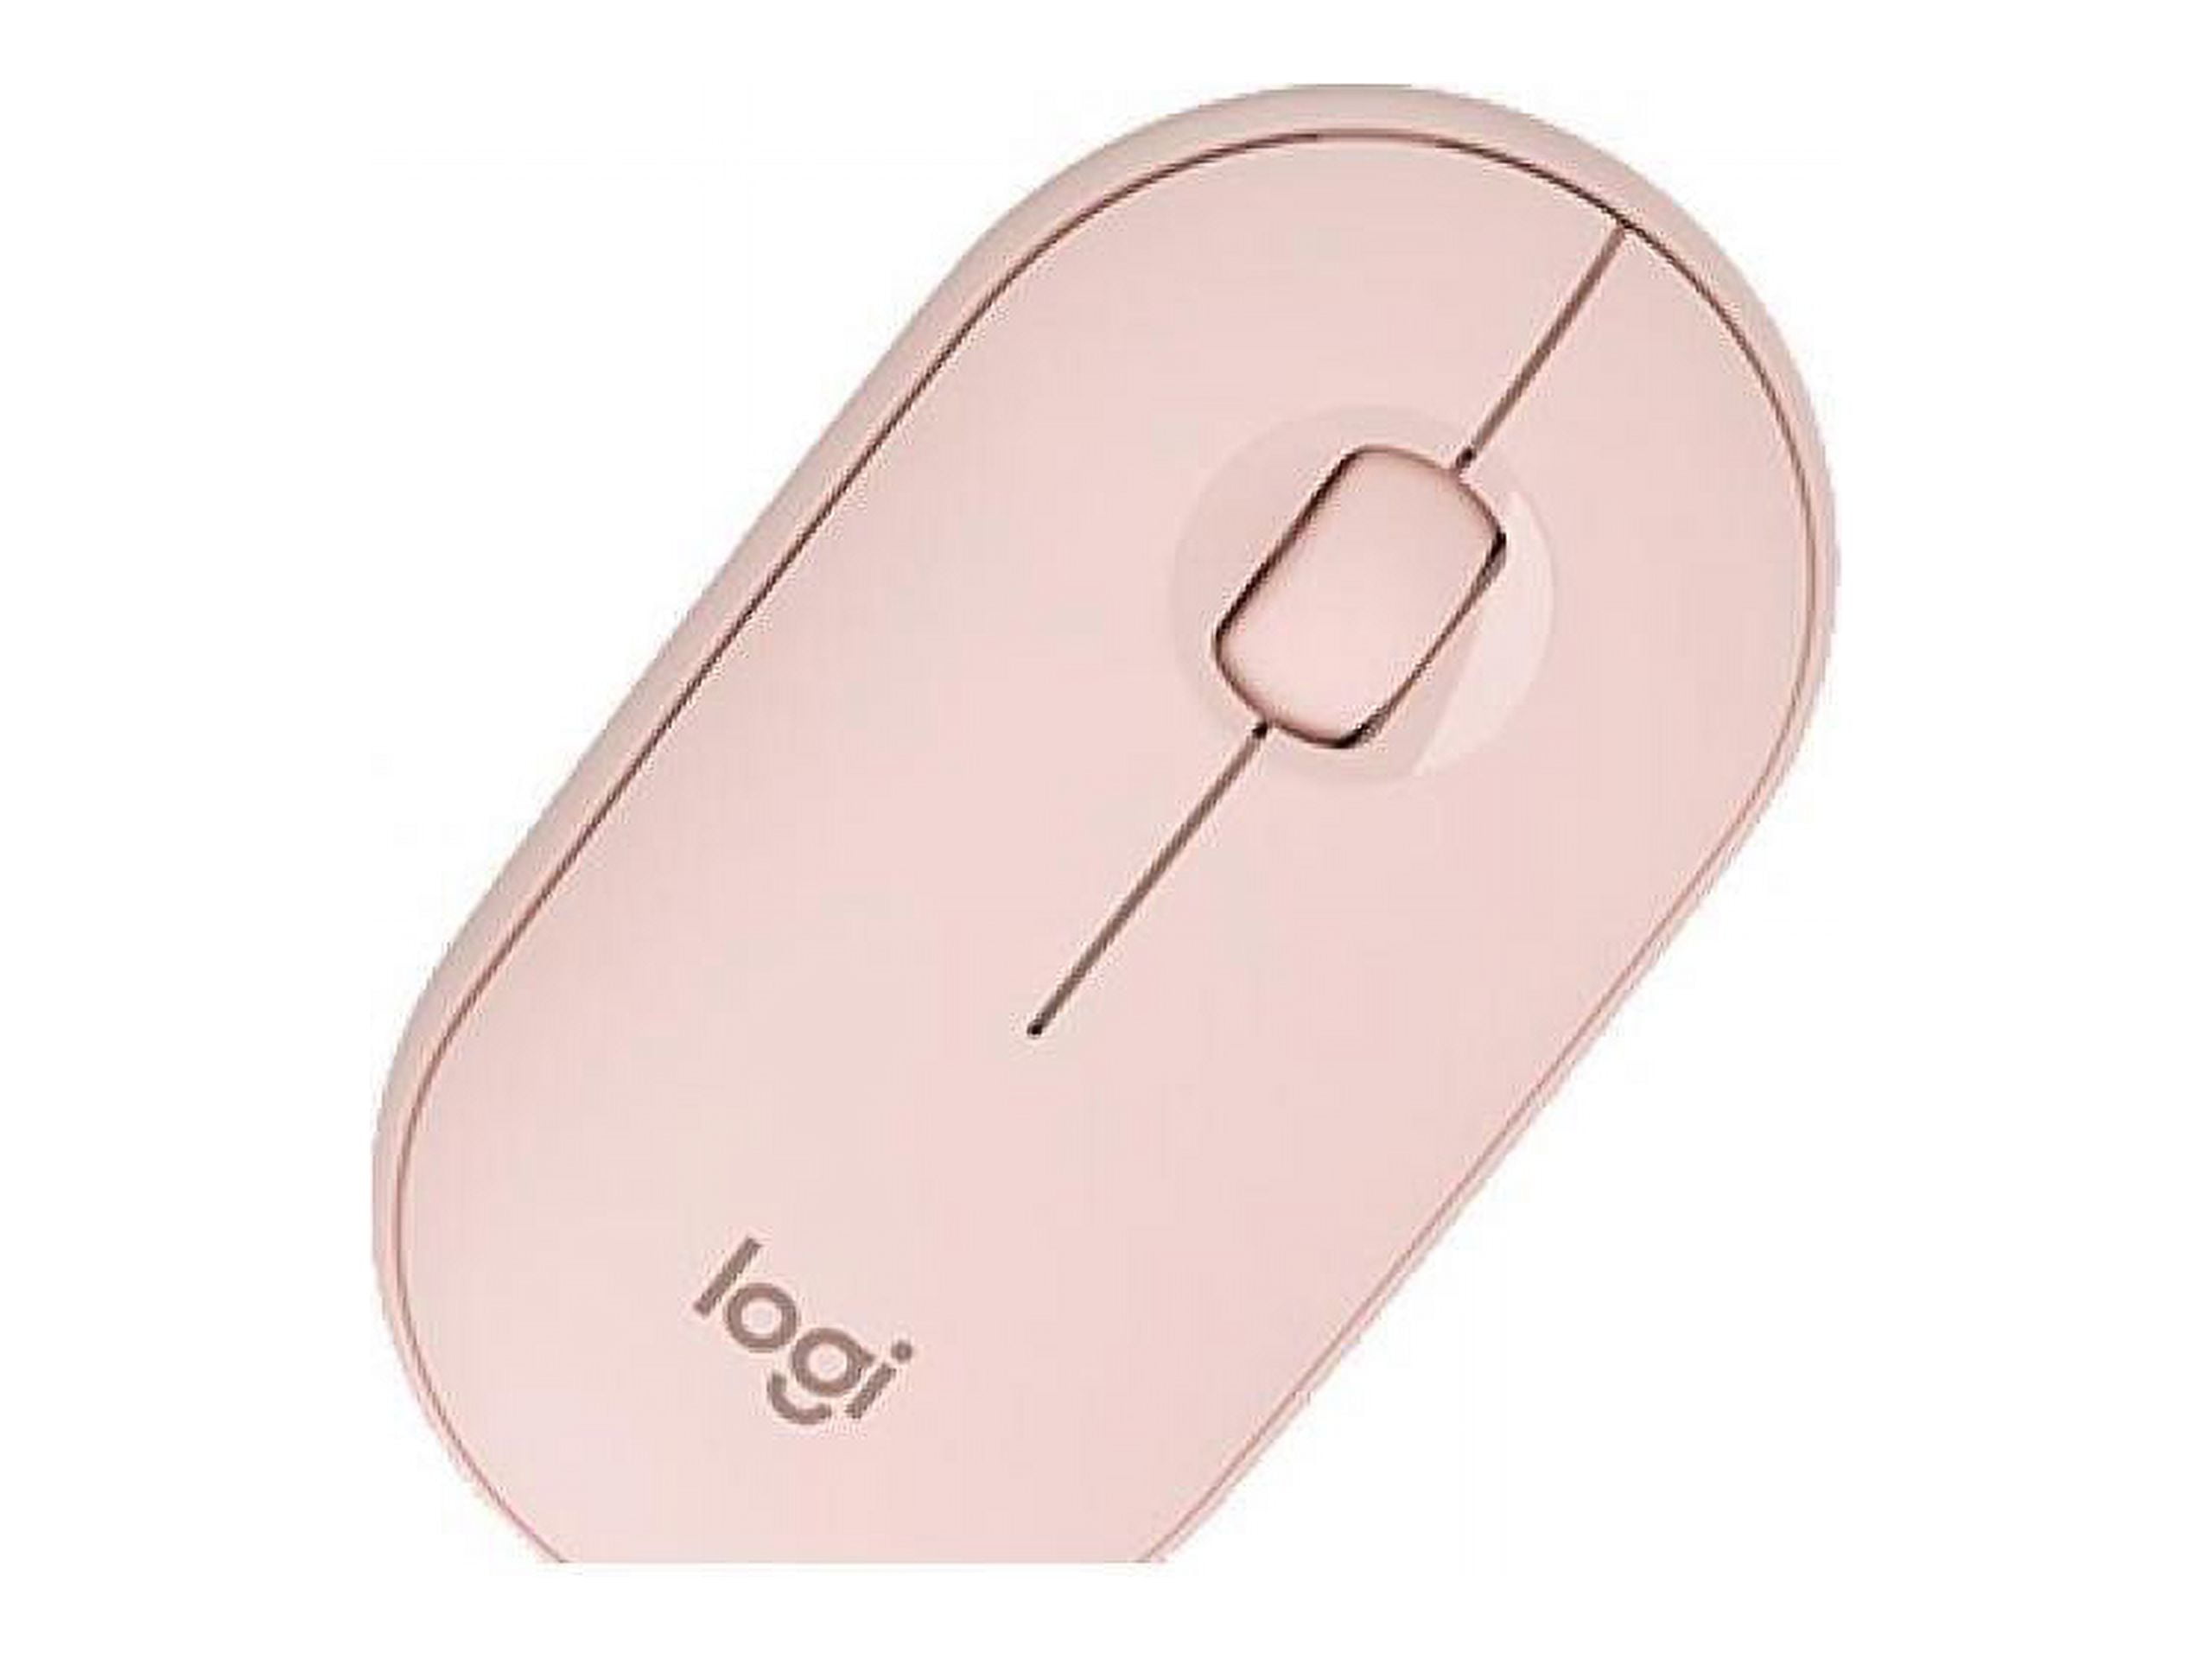 Logitech Pebble M350 Wireless Mouse - Pink Rose Mouse Pad Studio Series -  Darker Rose